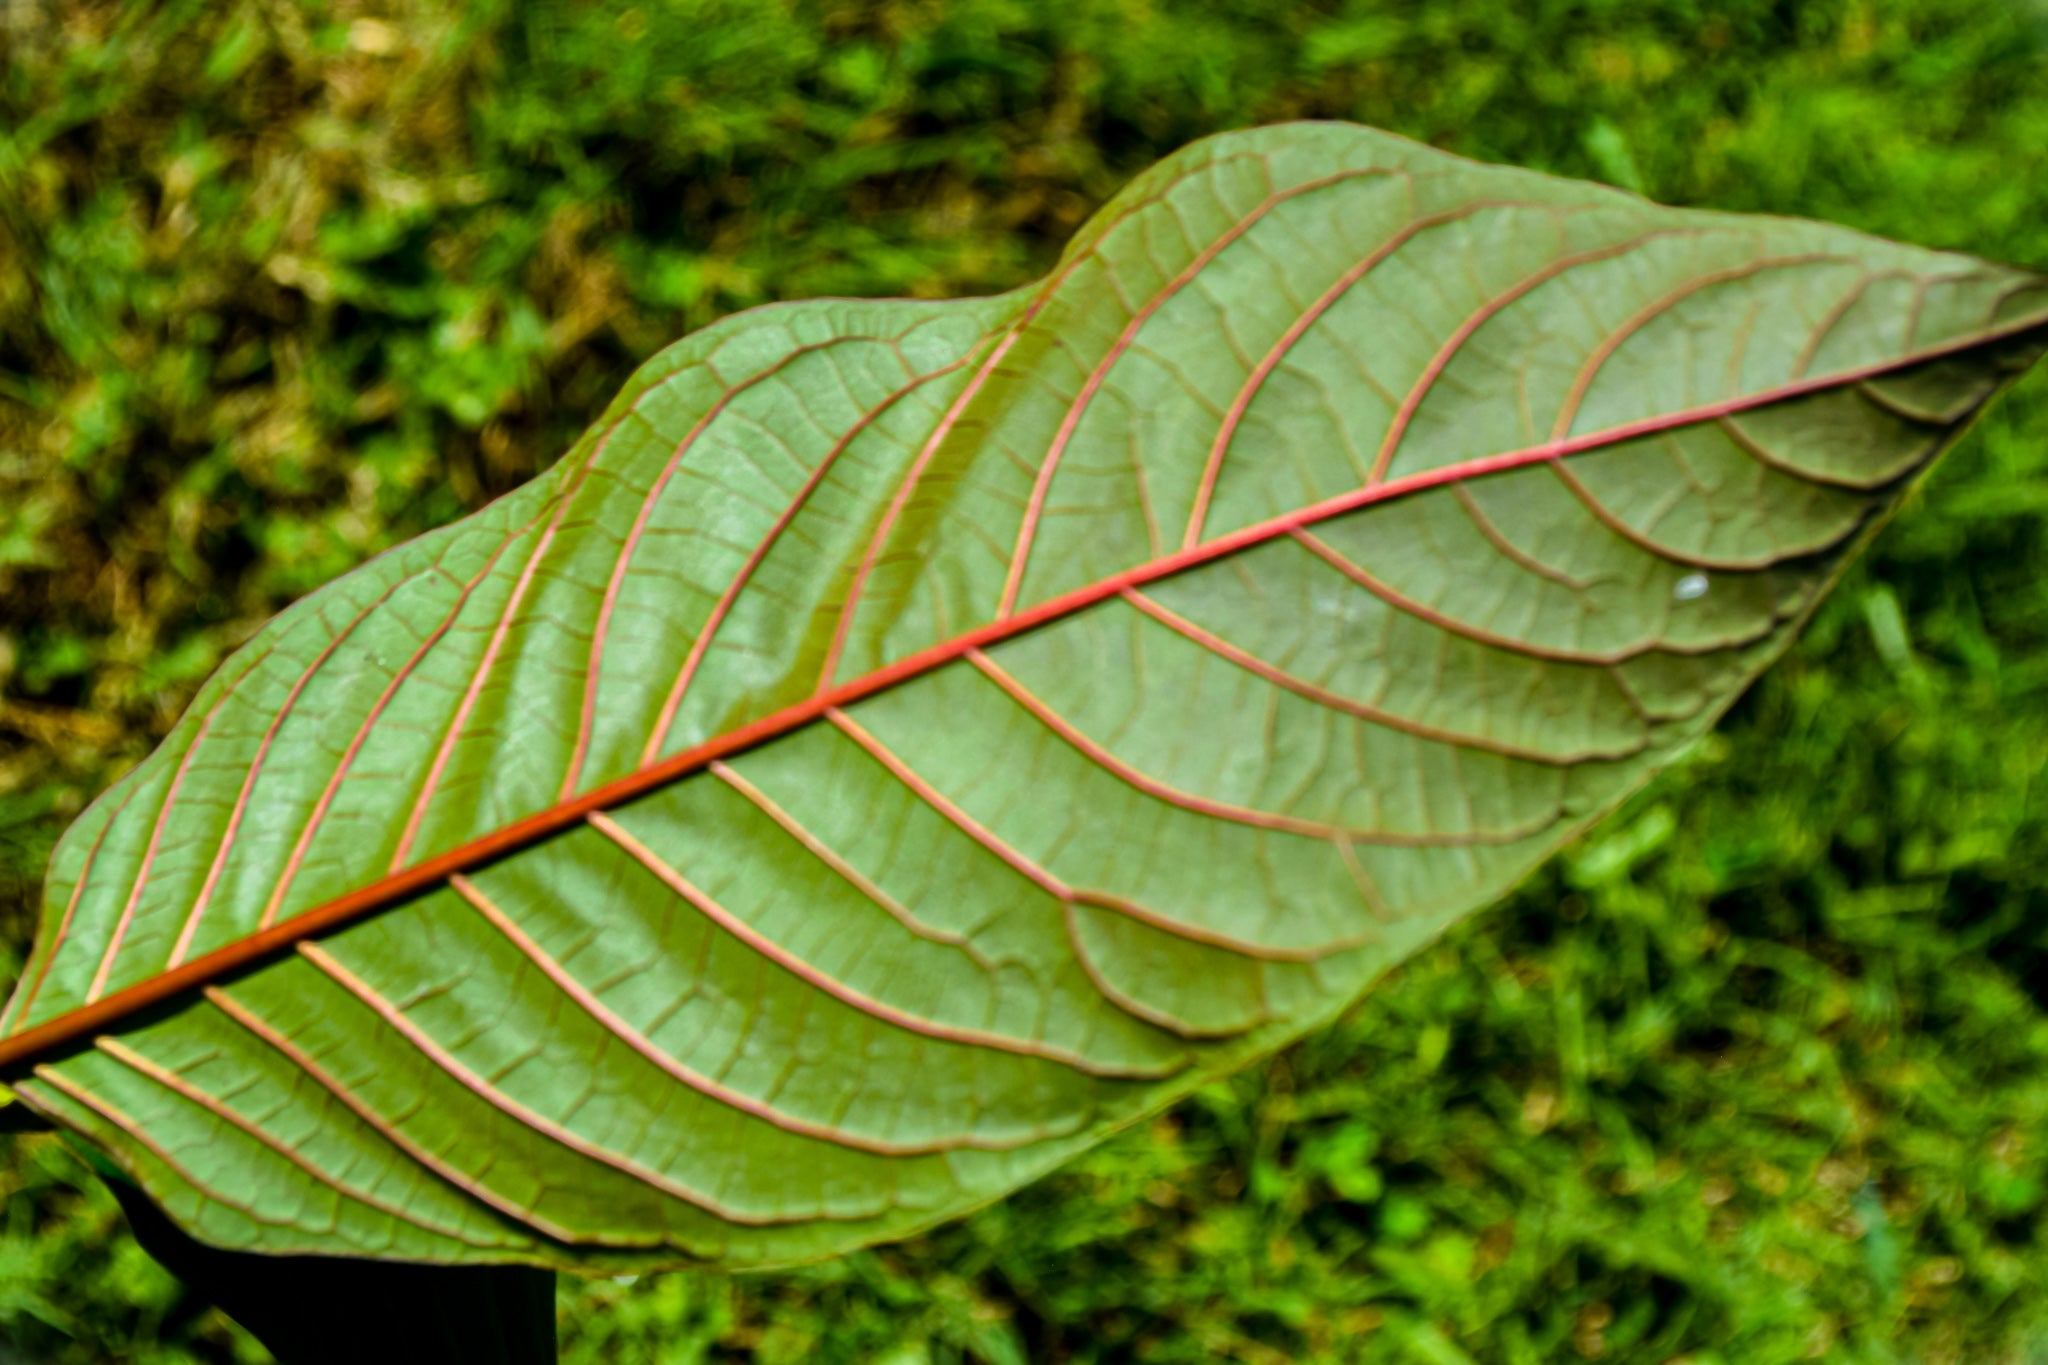 Borneo (Kalimantan) Kratom Plant